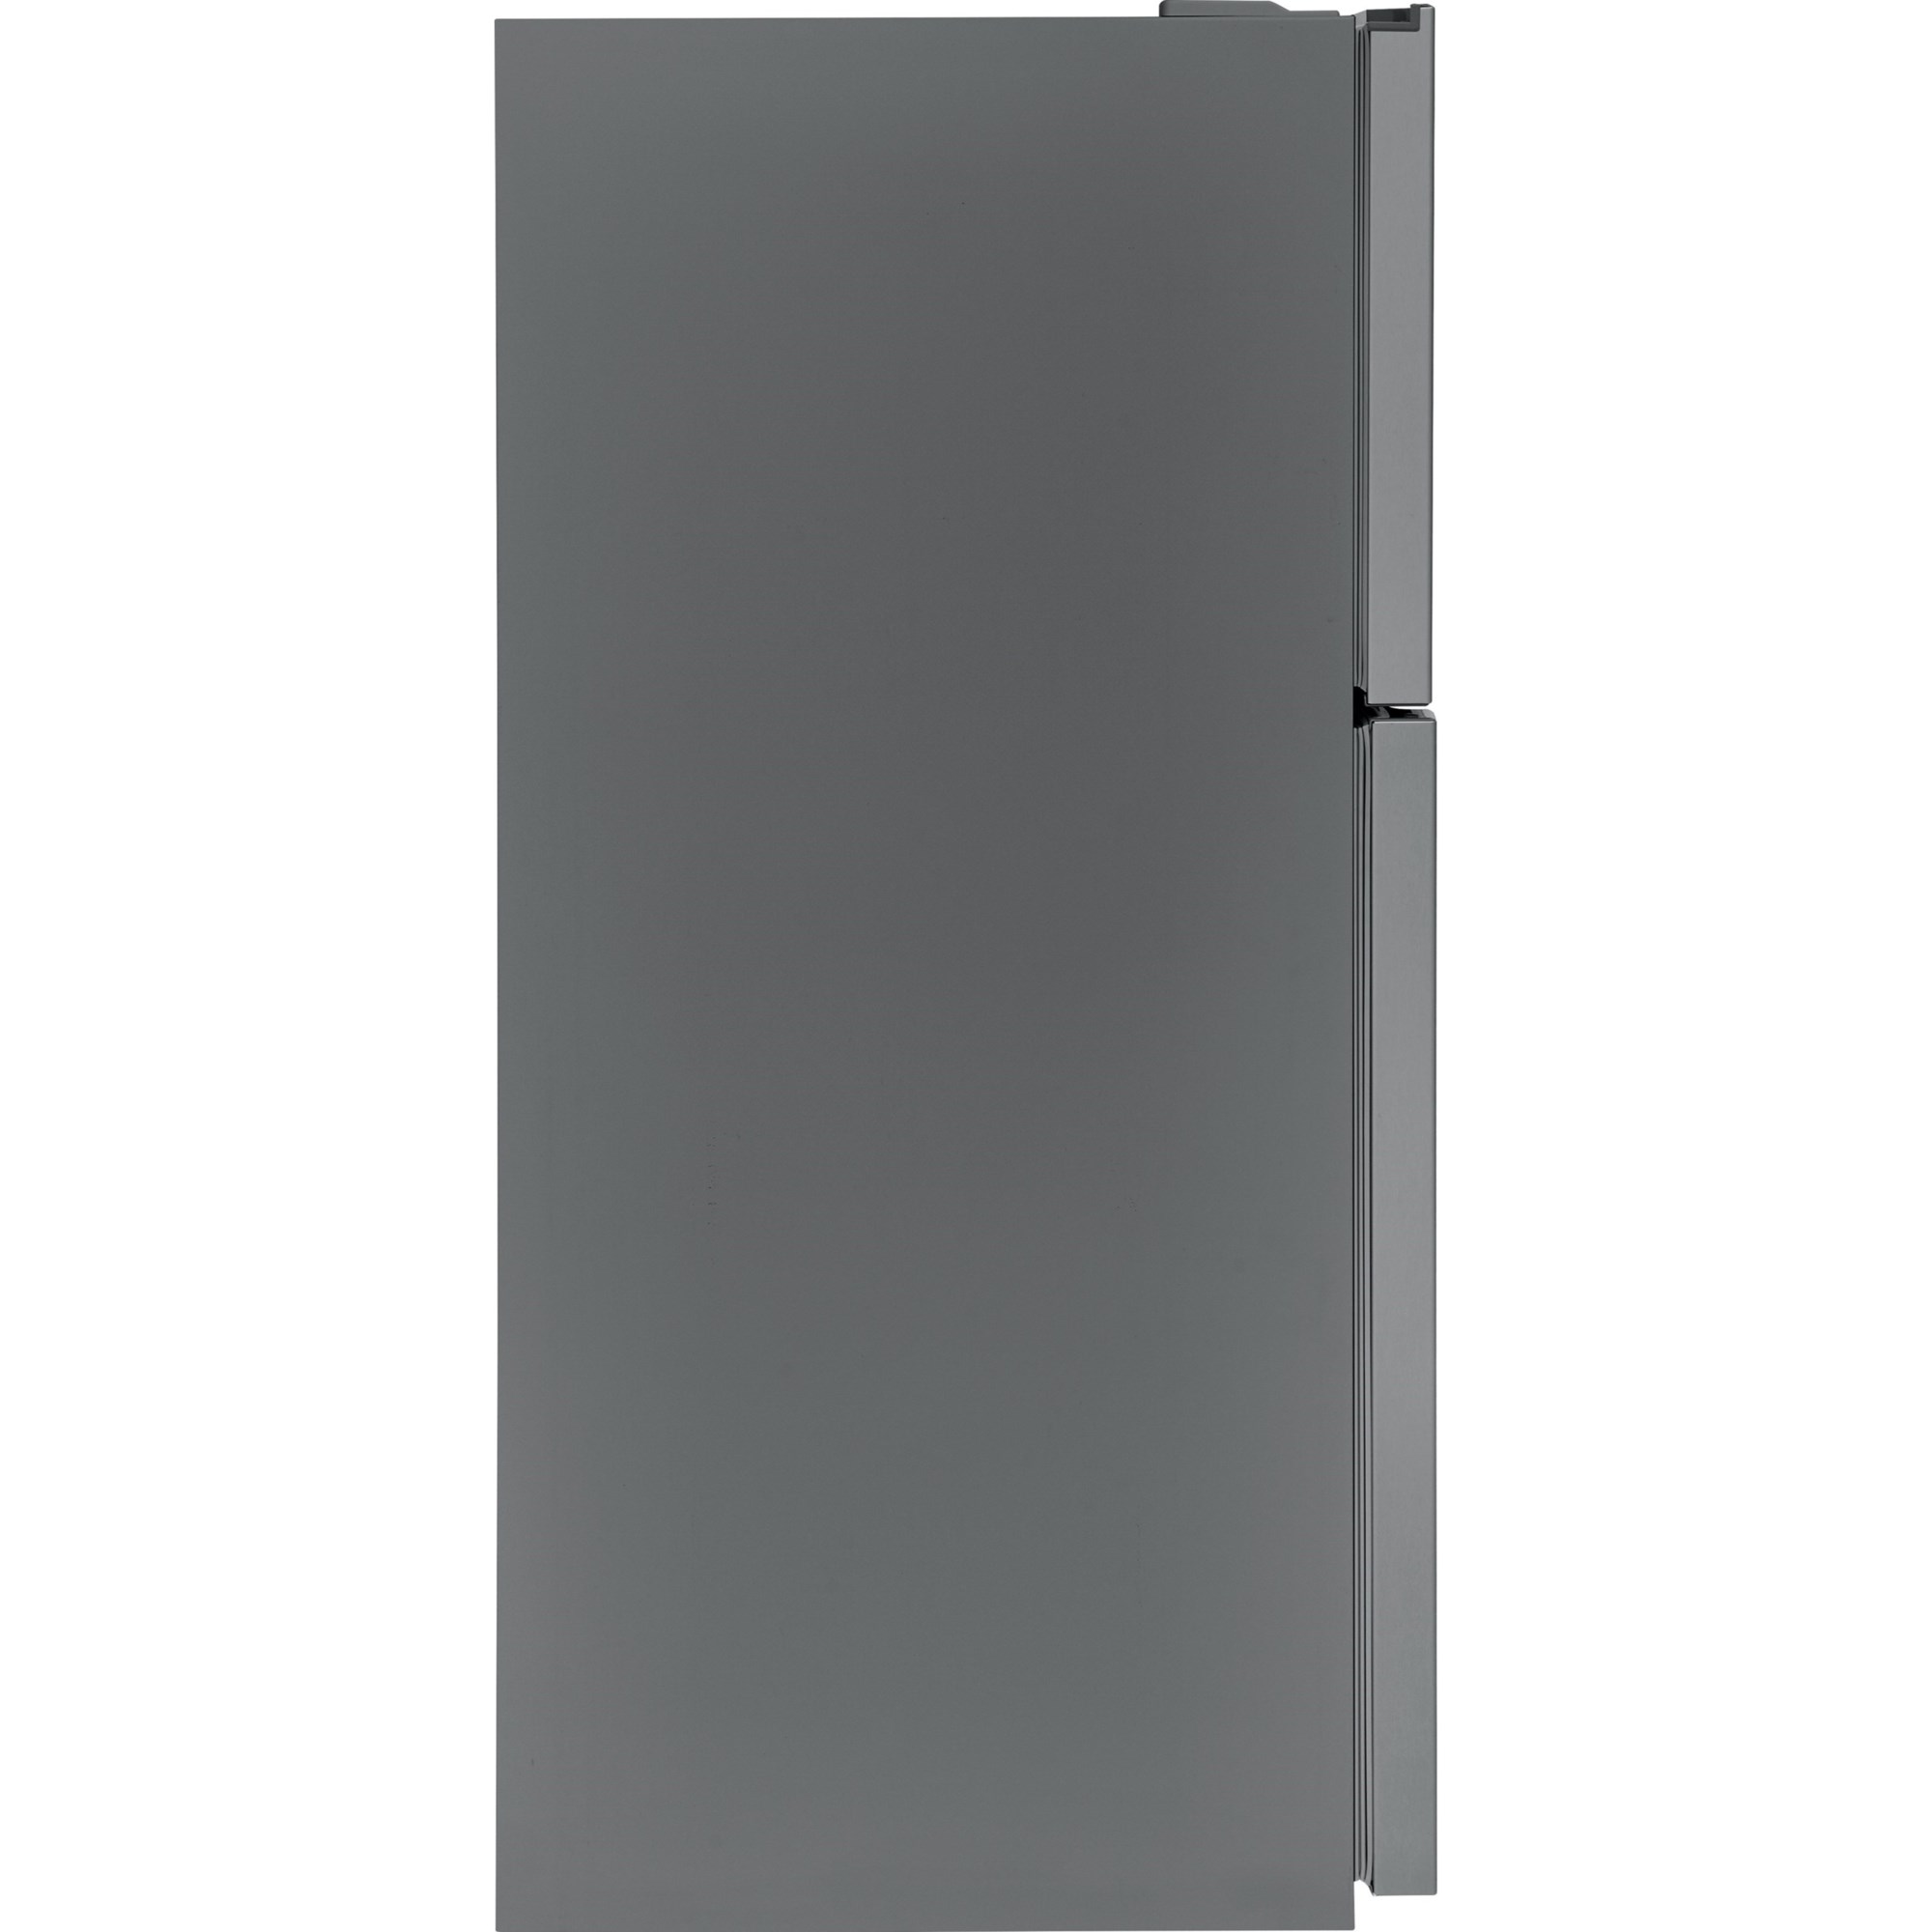 Frigidaire 10.1 Cu. Ft. Top Freezer Apartment Size Refrigerator in